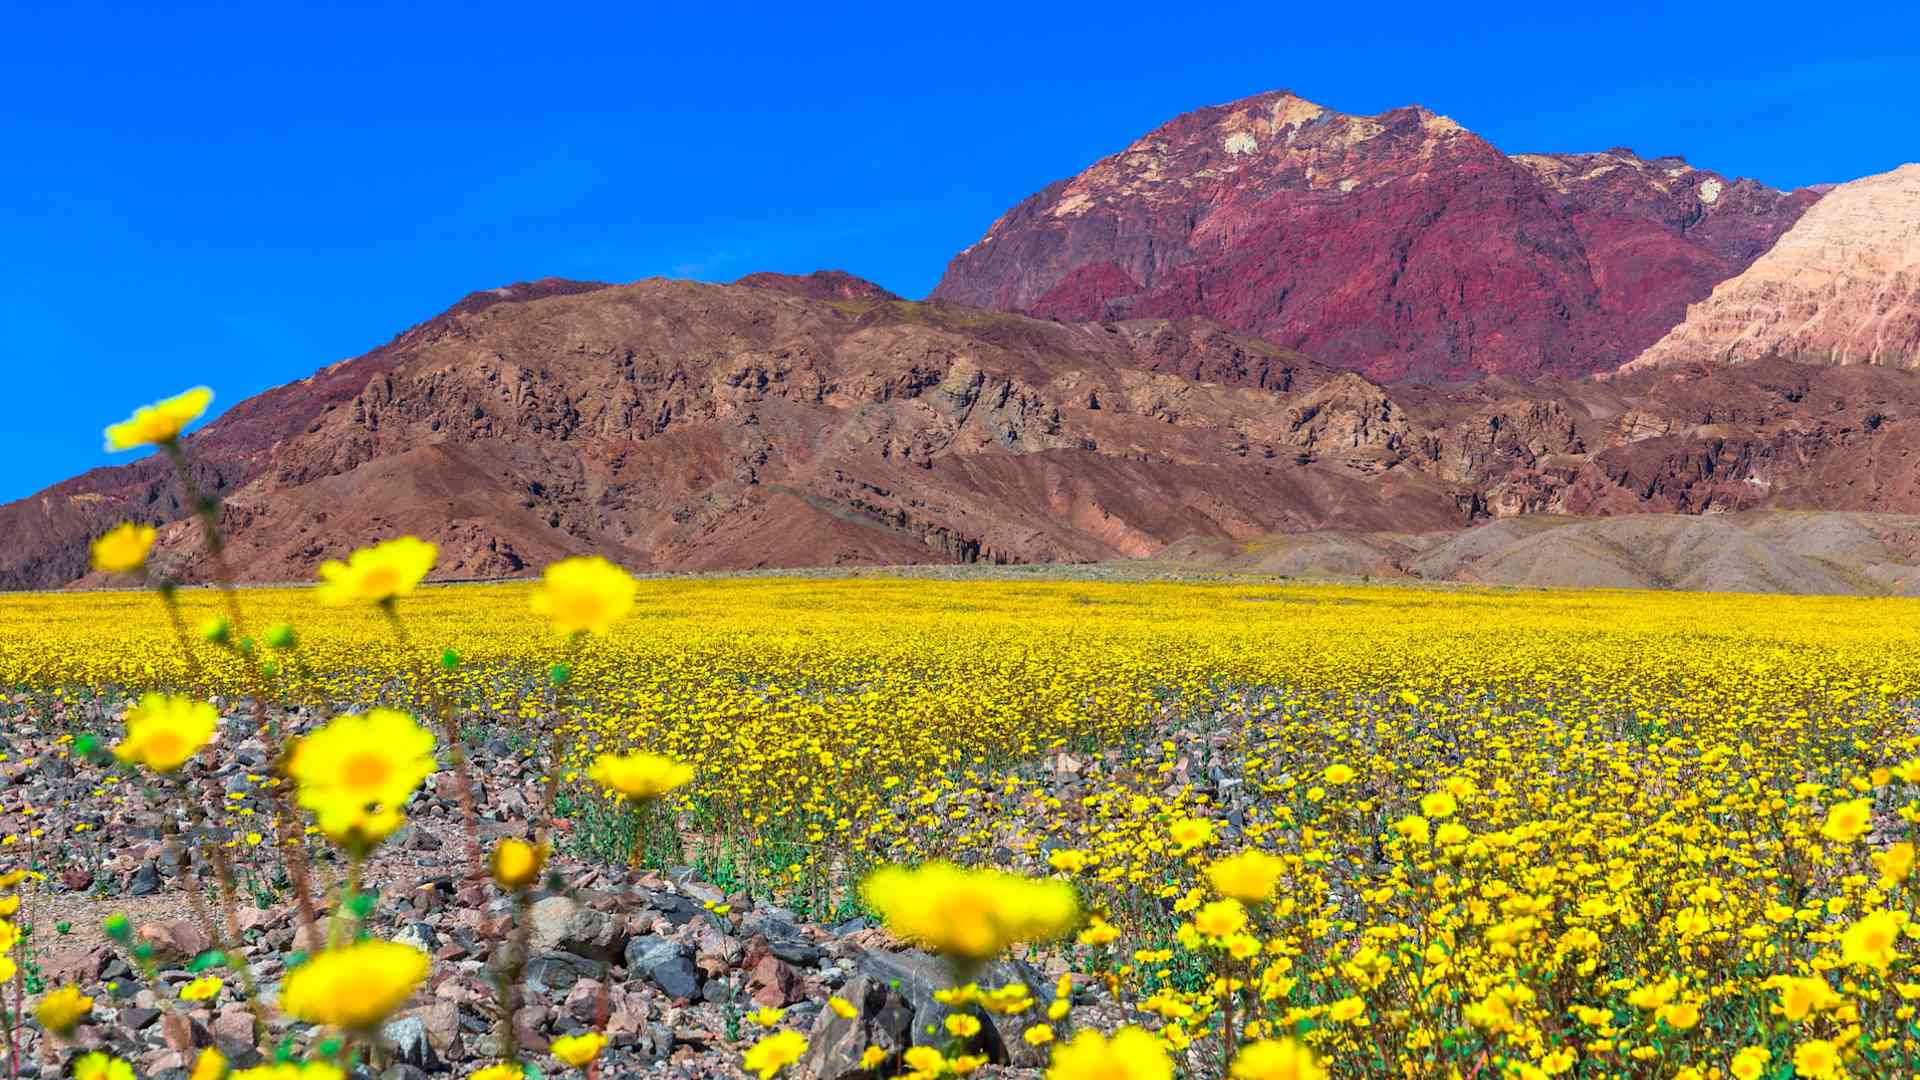 When Is Wildflower Season In Death Valley